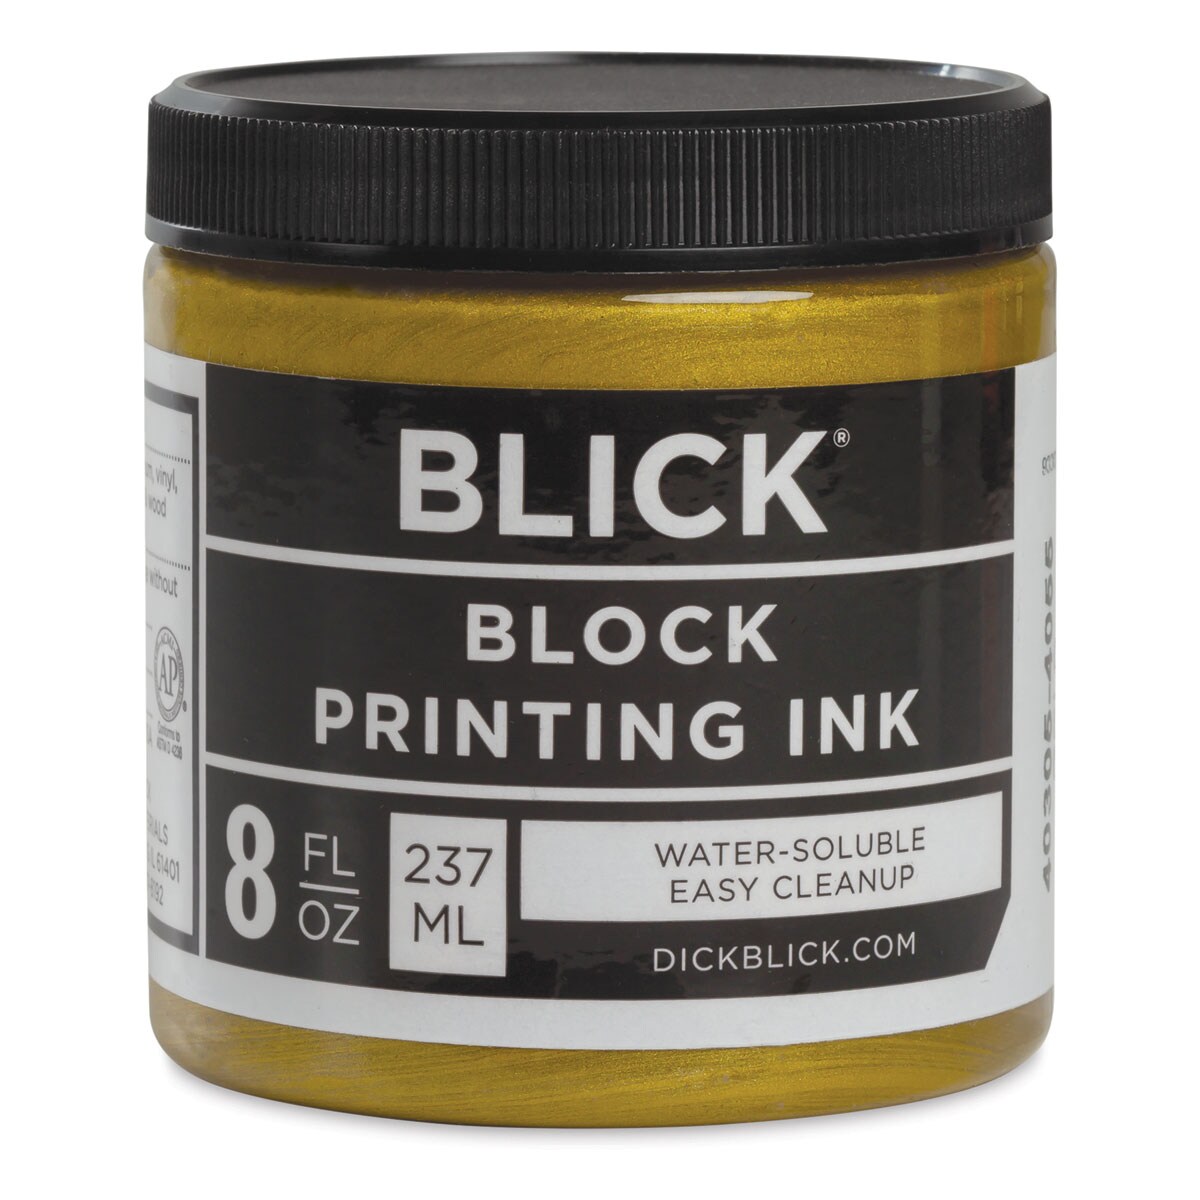 Blick Water-Soluble Block Printing Ink - Gold, 8 oz Jar